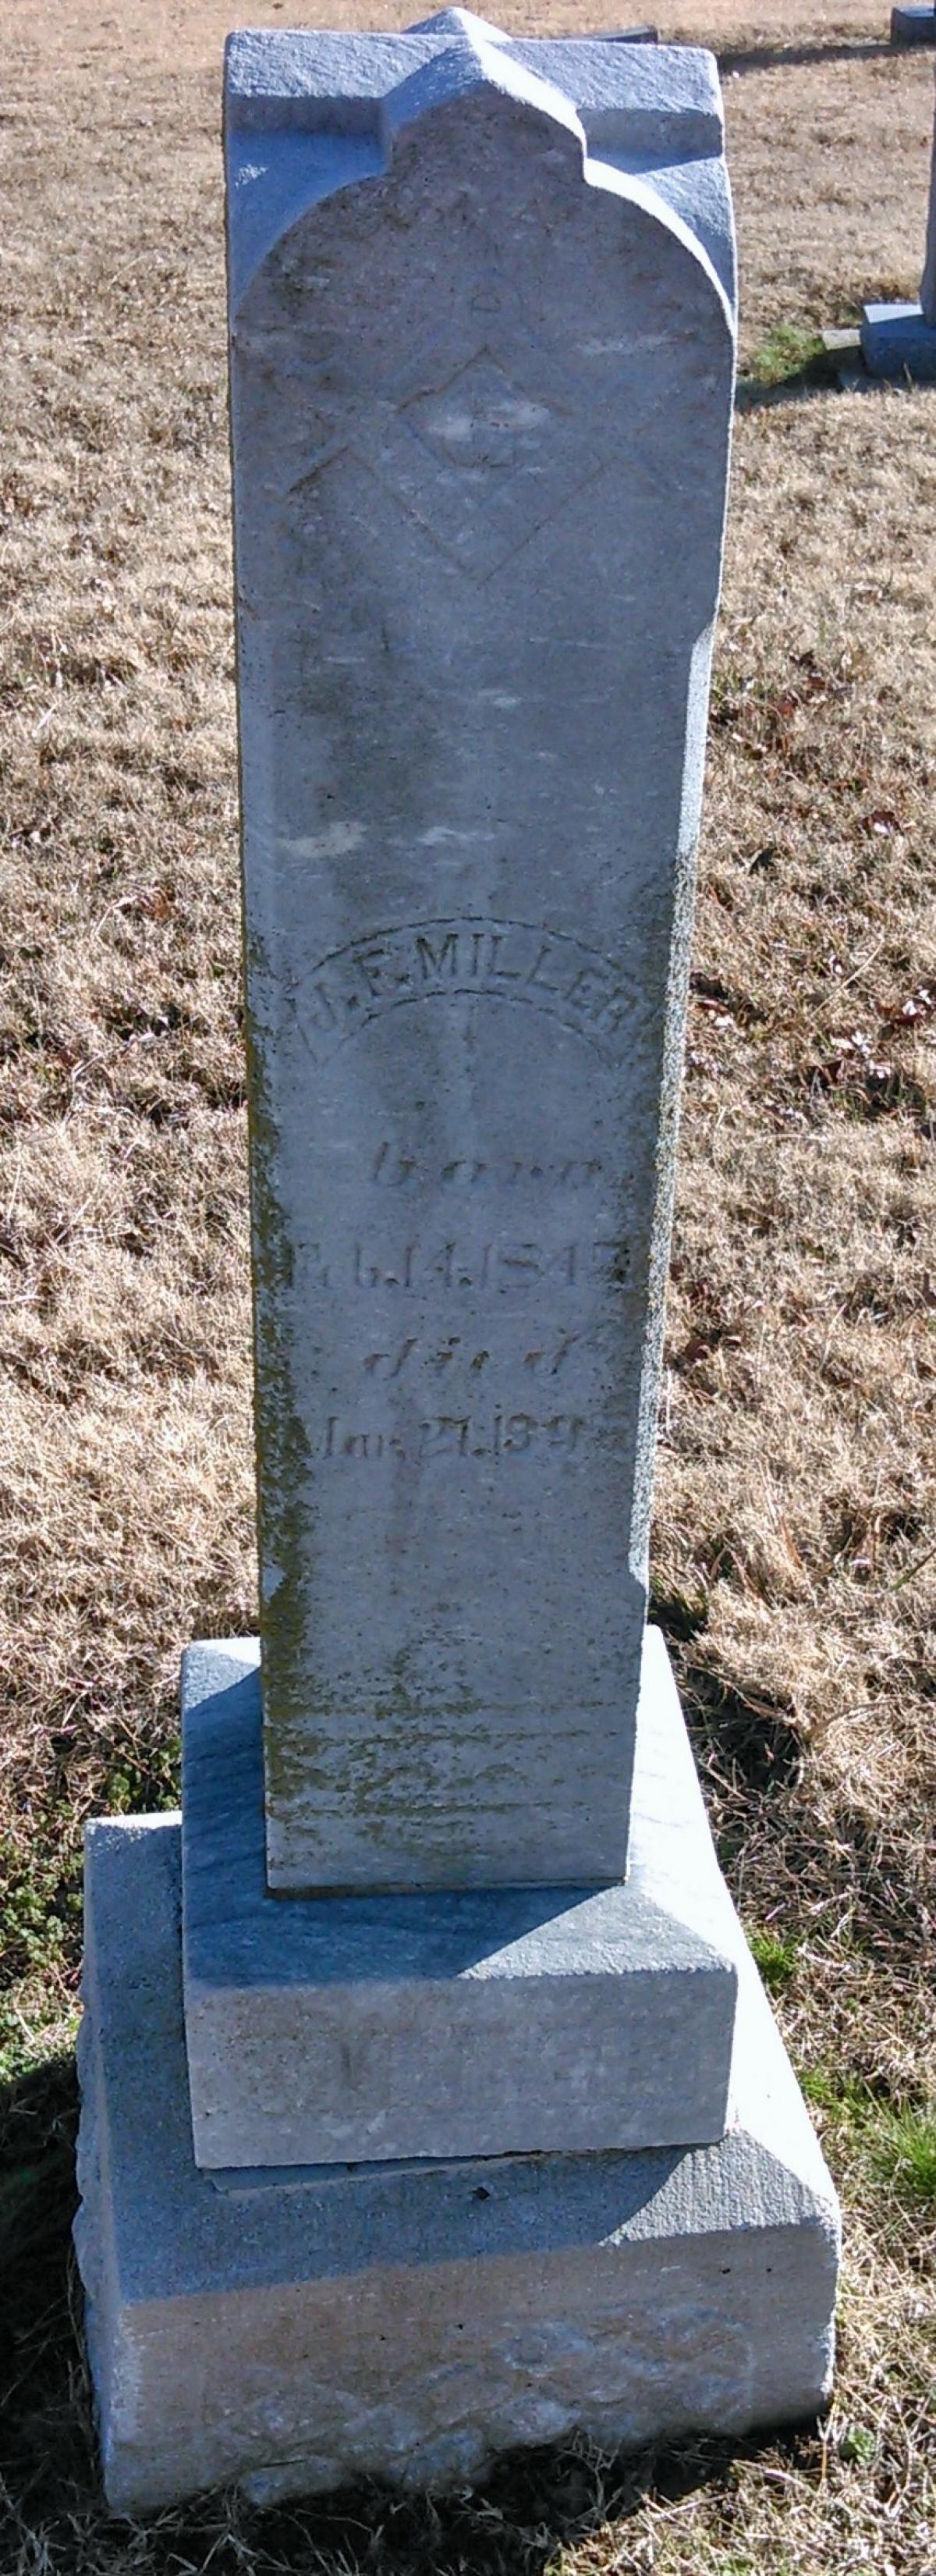 OK, Grove, Buzzard Cemetery, Miller, J. F. Headstone